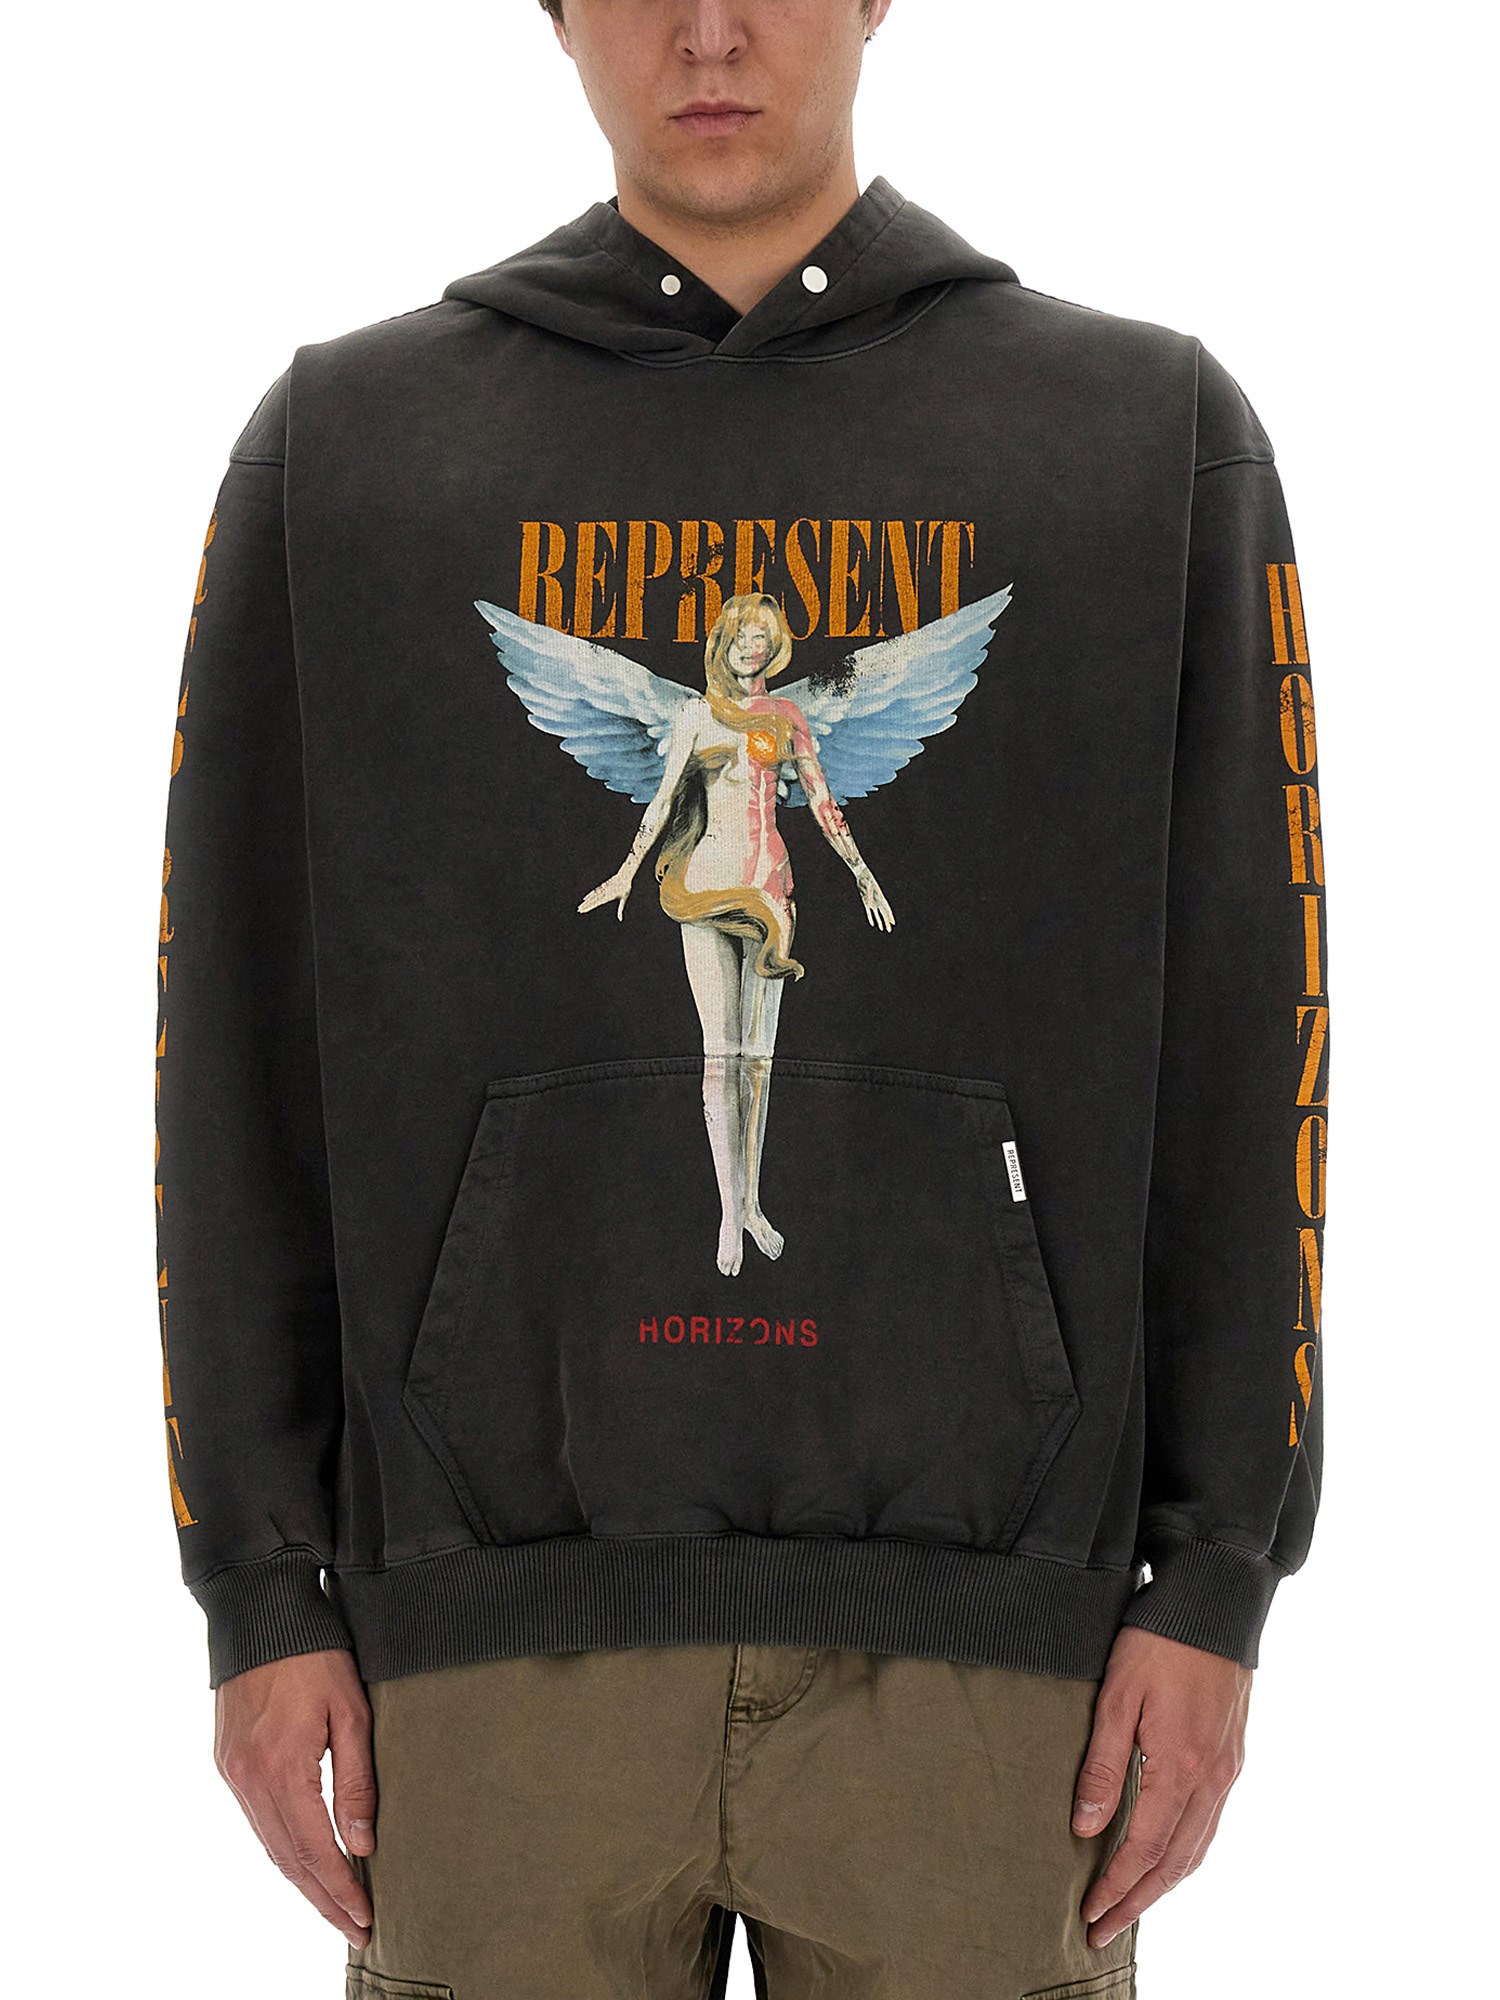 Represent represent "reborn" sweatshirt